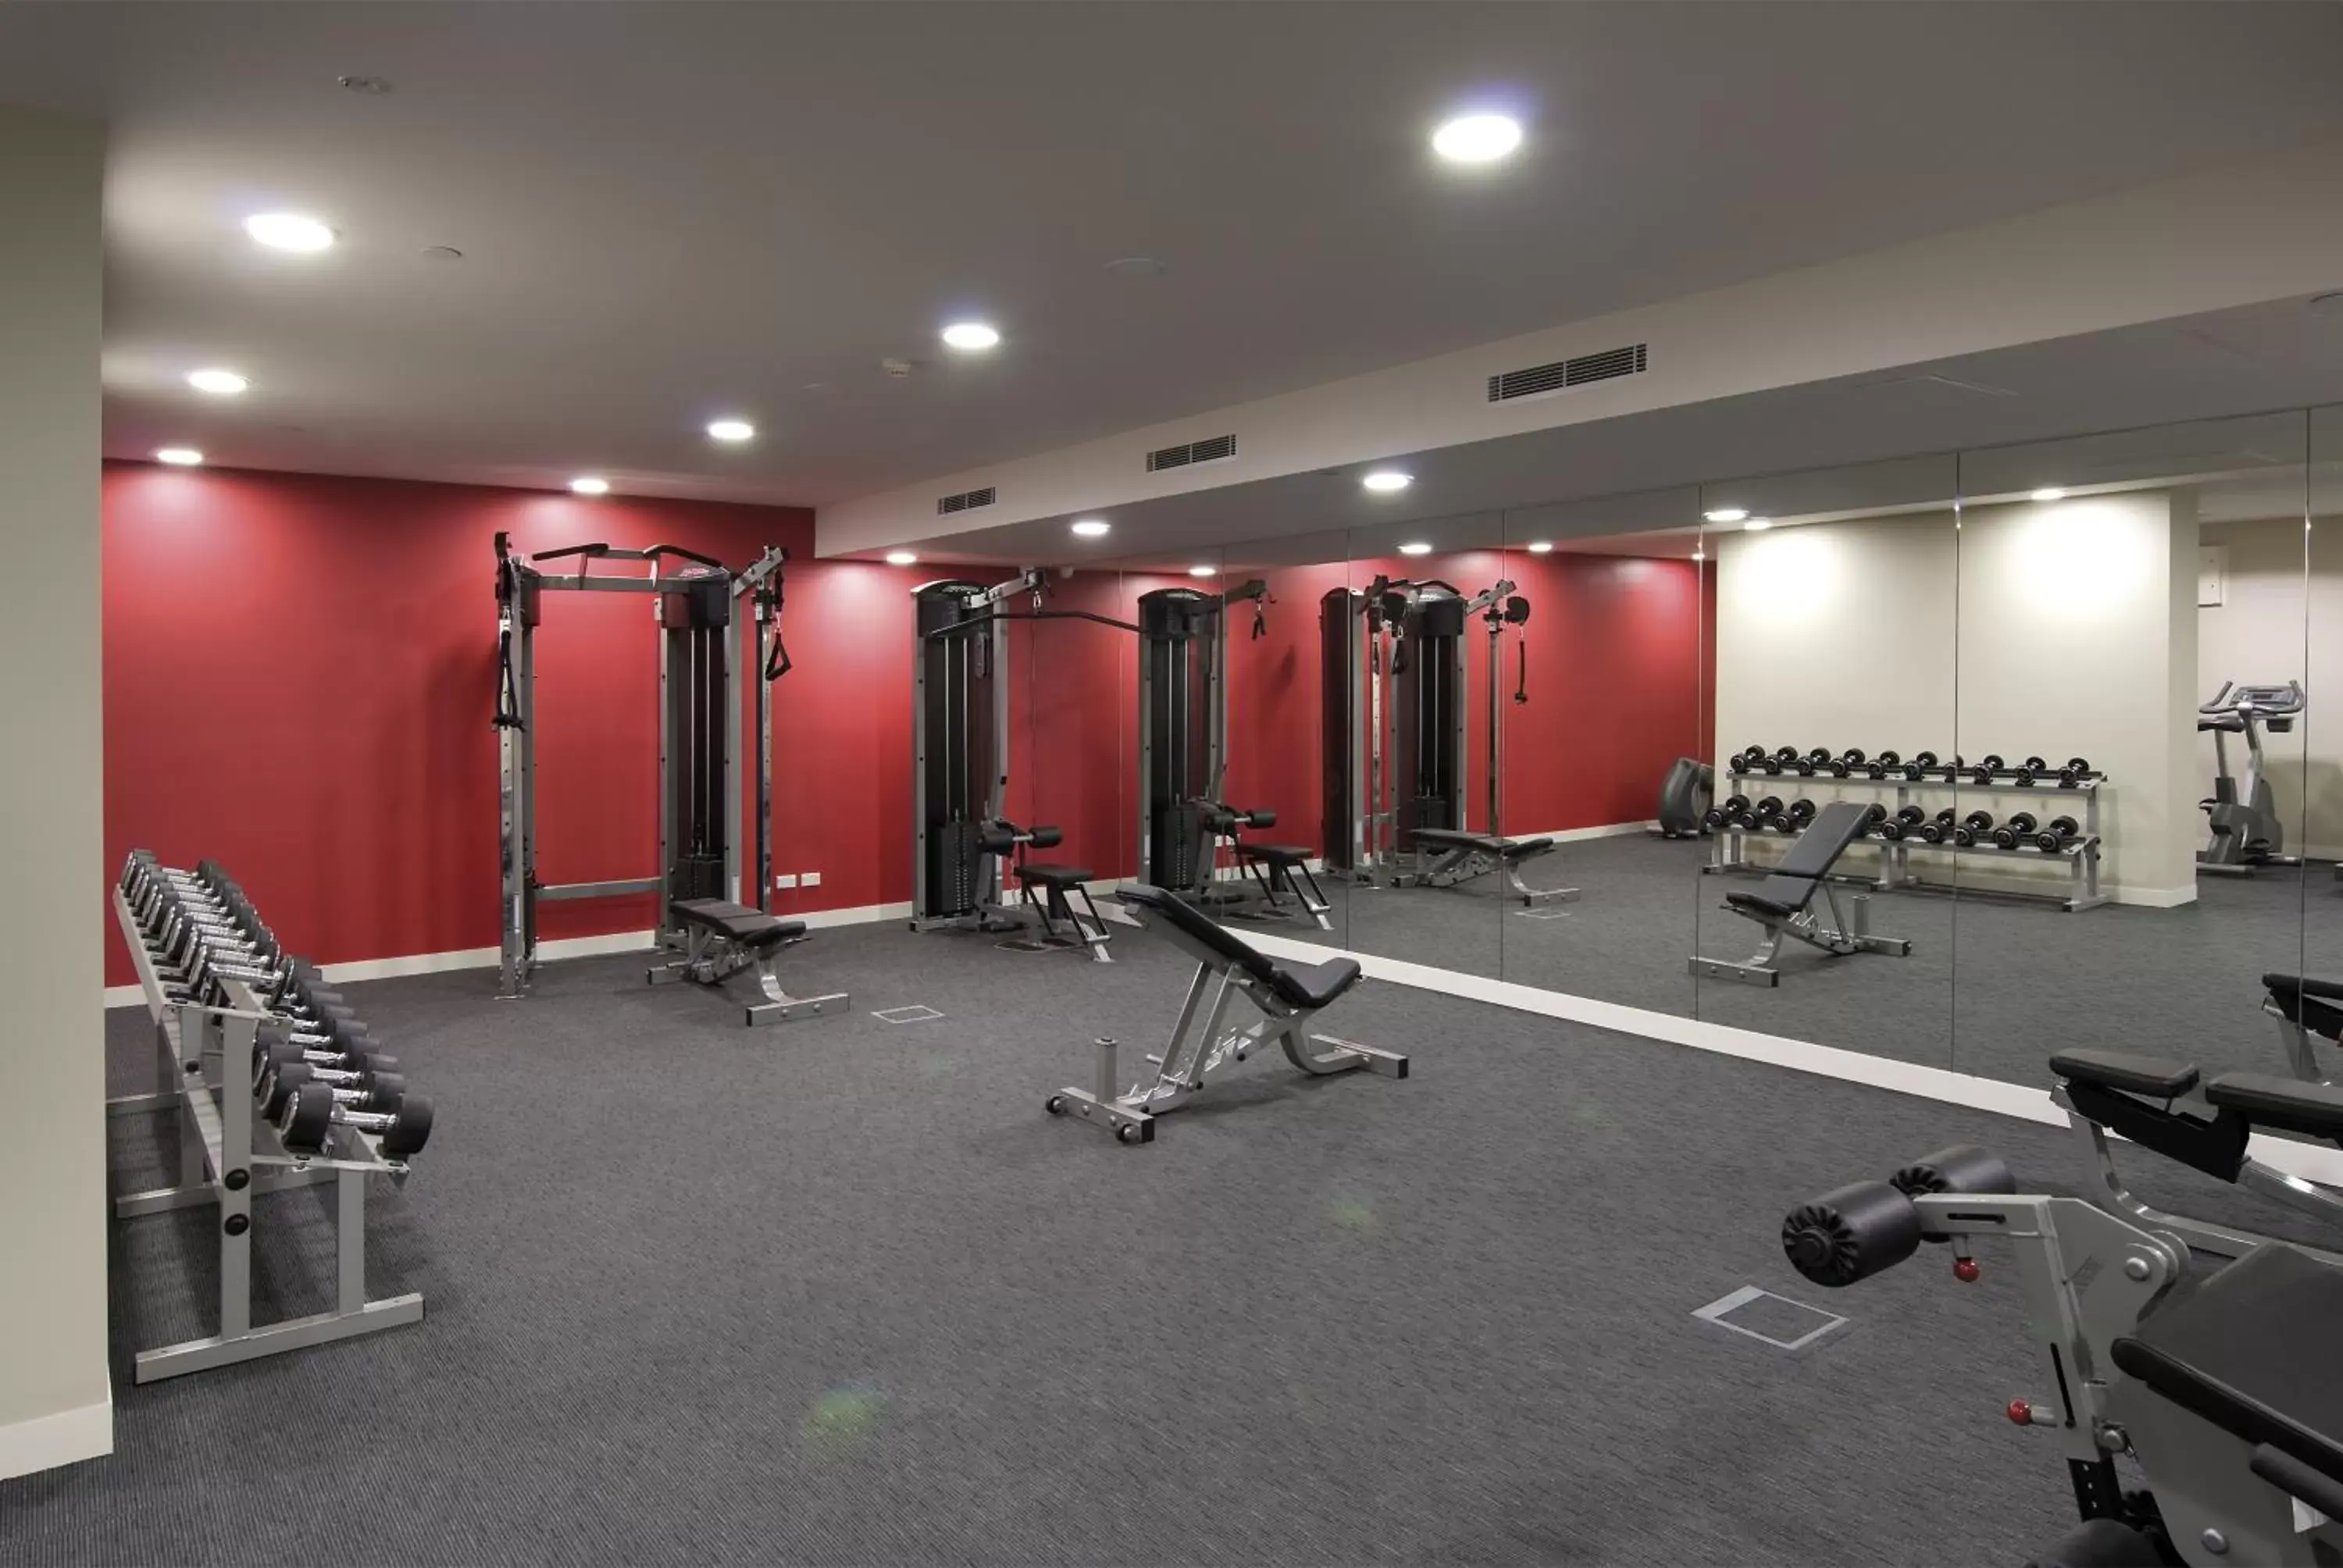 Fitness centre/facilities, Fitness Center/Facilities in Atlantis Hotel Melbourne